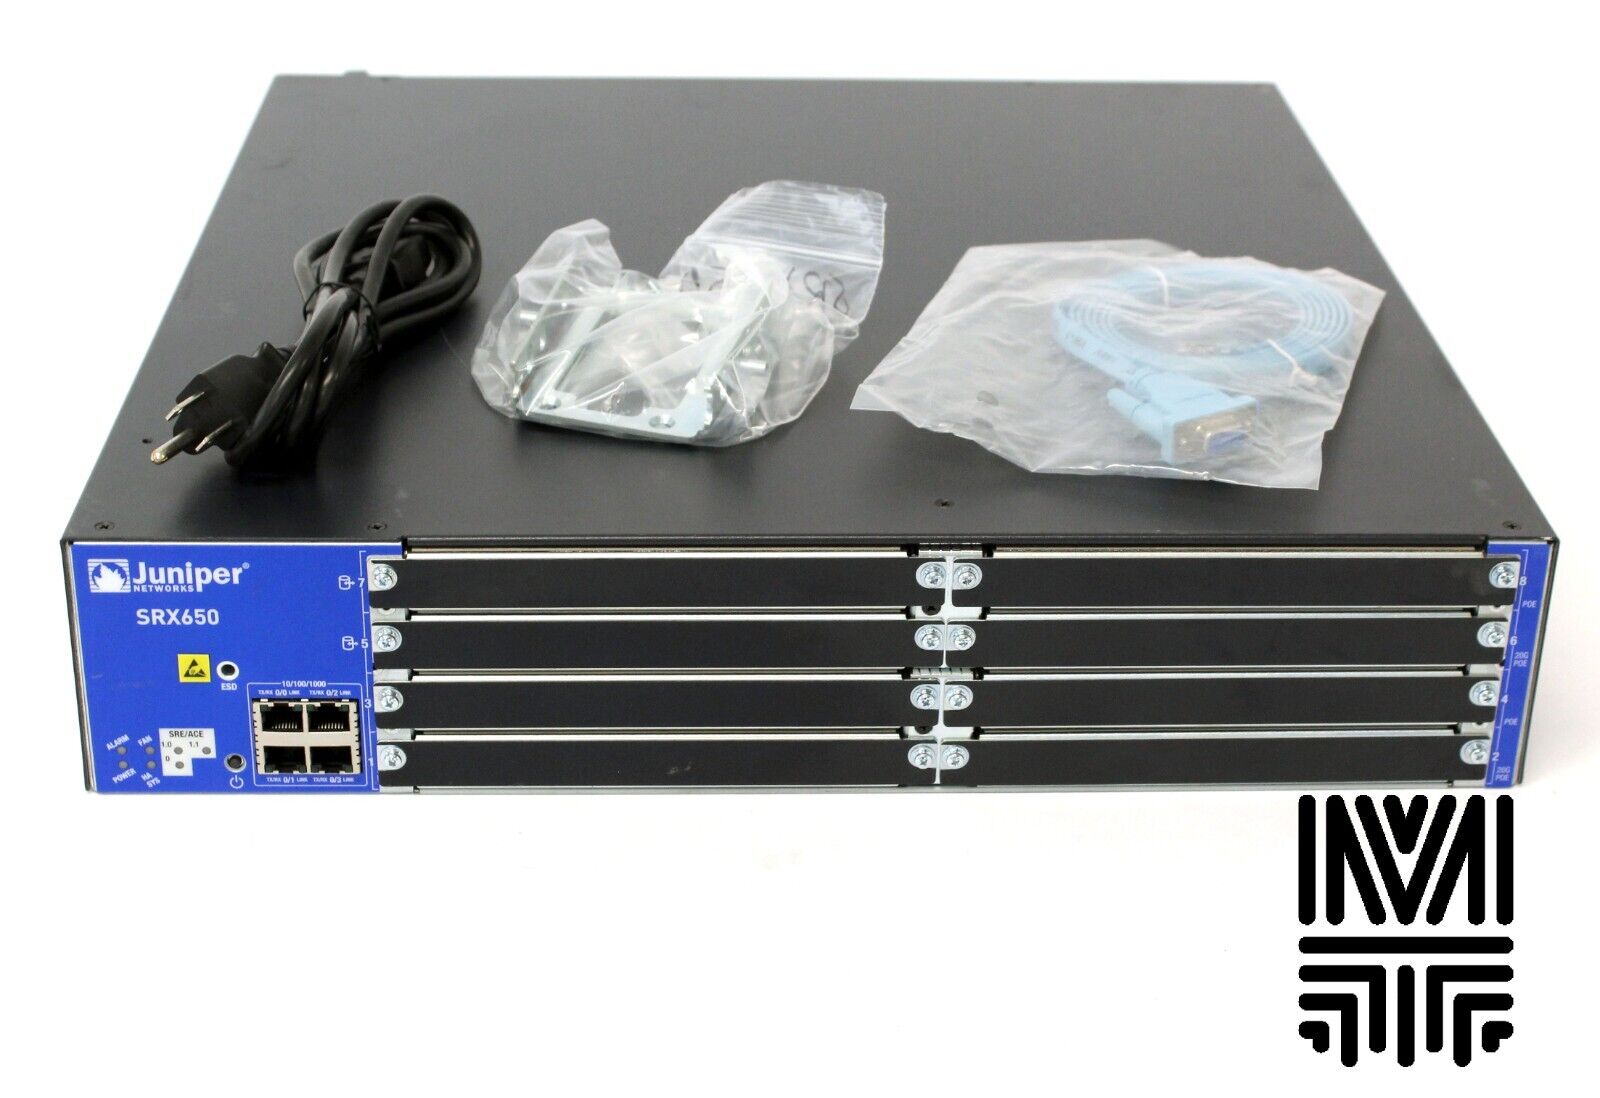 Juniper SRX650 Services Gateway 10/100/1000 Ethernet LAN Firewall 8 GPIM Slots